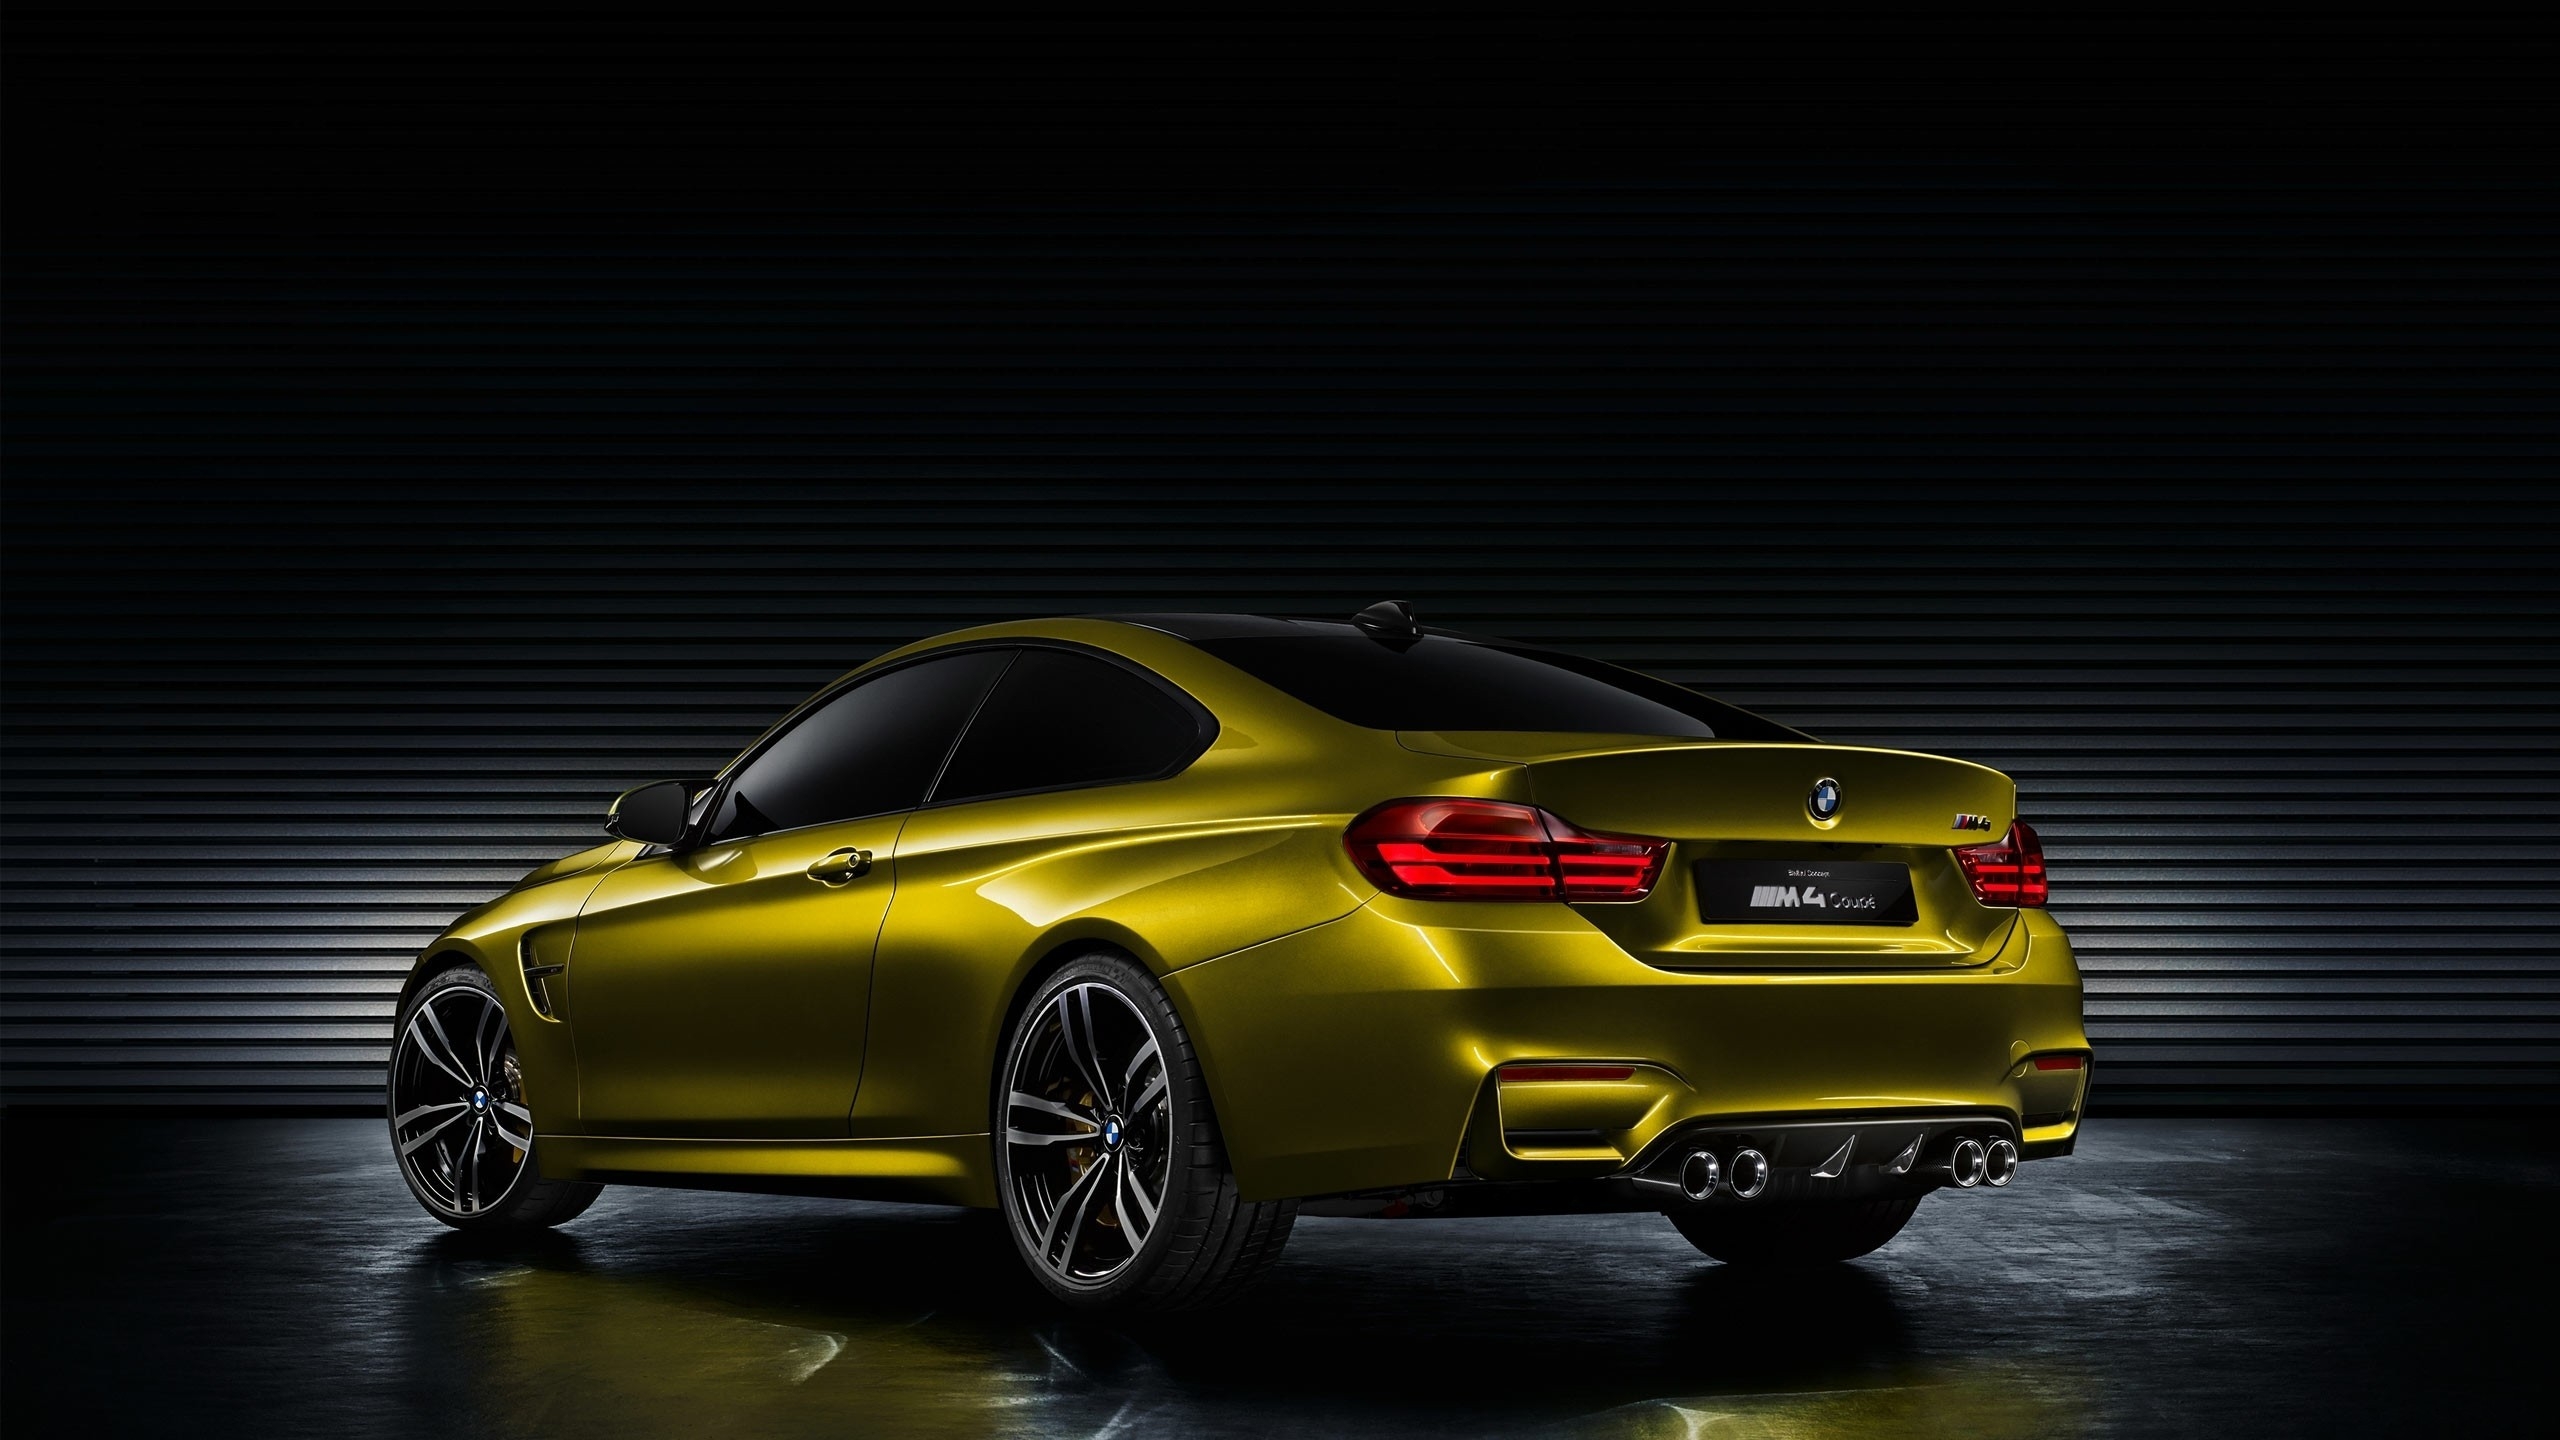 Stunning BMW M4 for 2560x1440 HDTV resolution